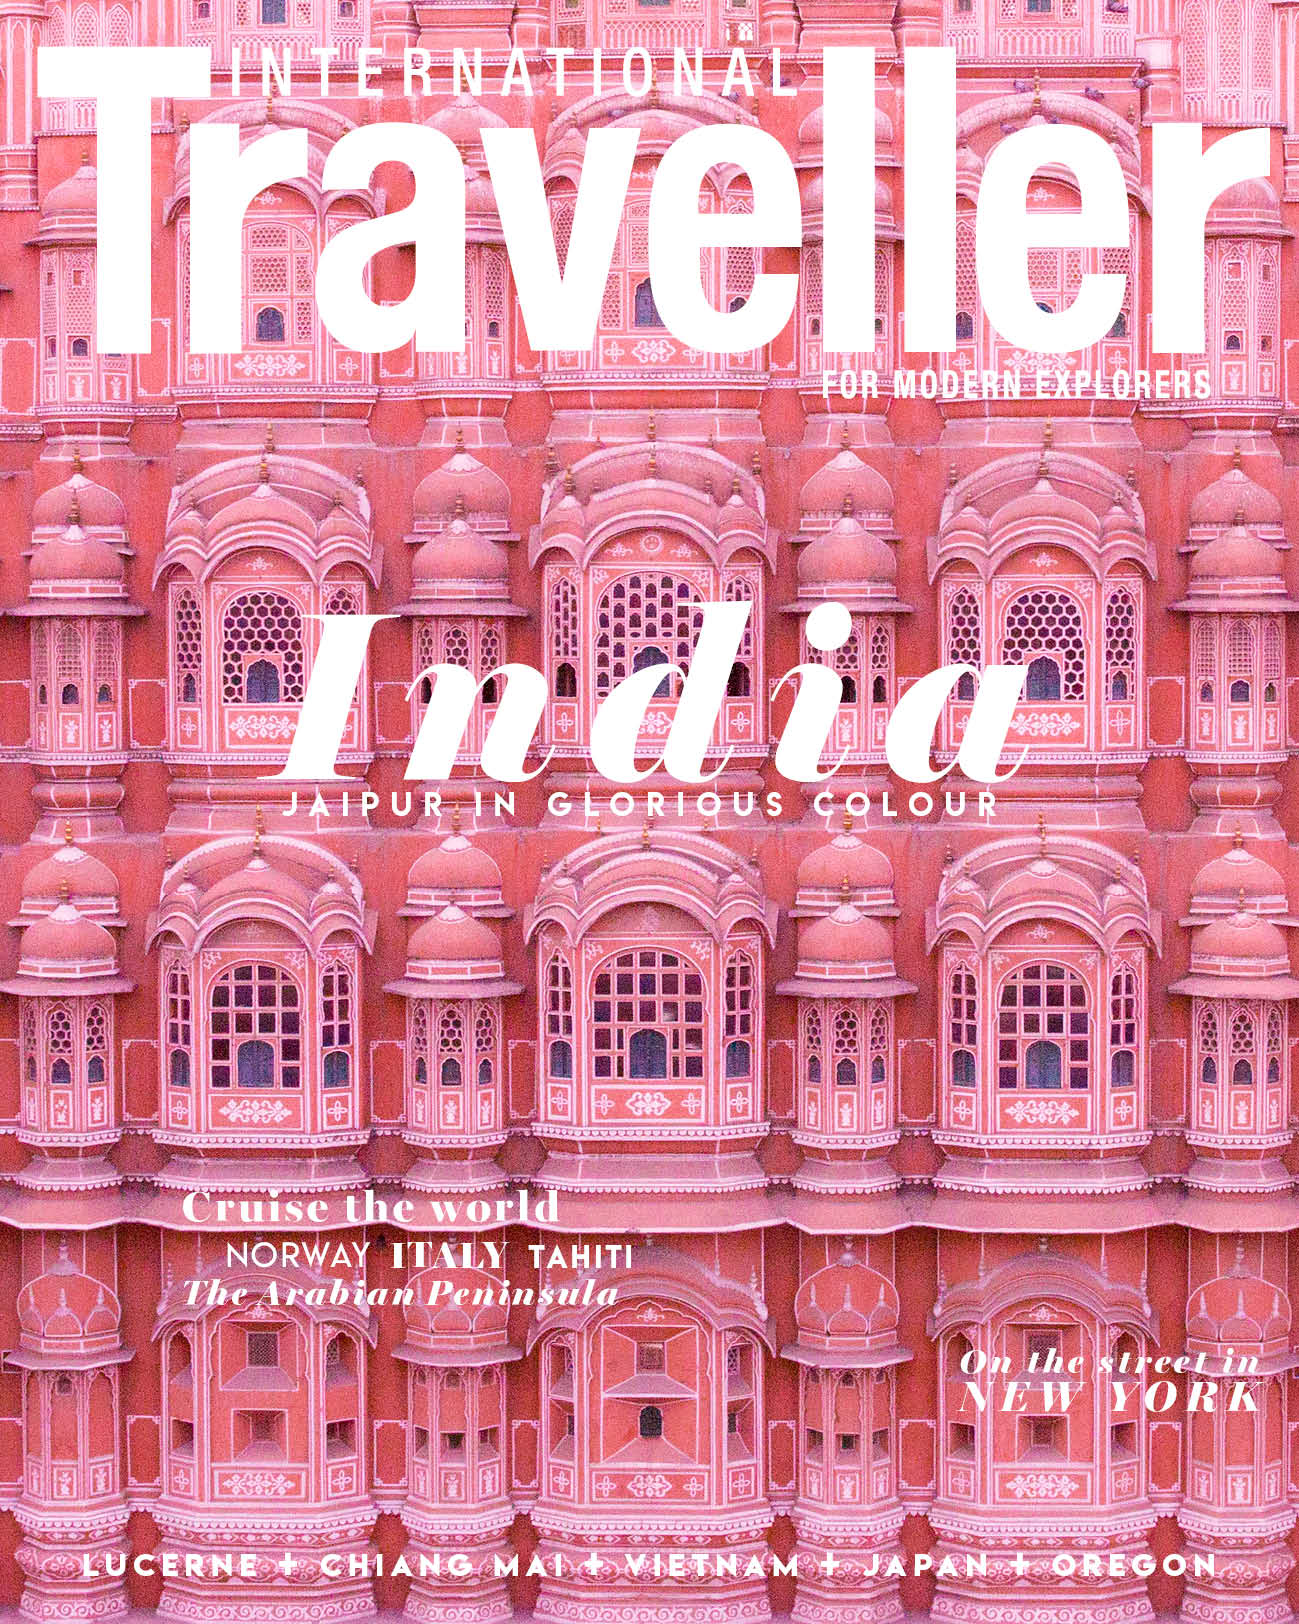 International Traveller Issue 37